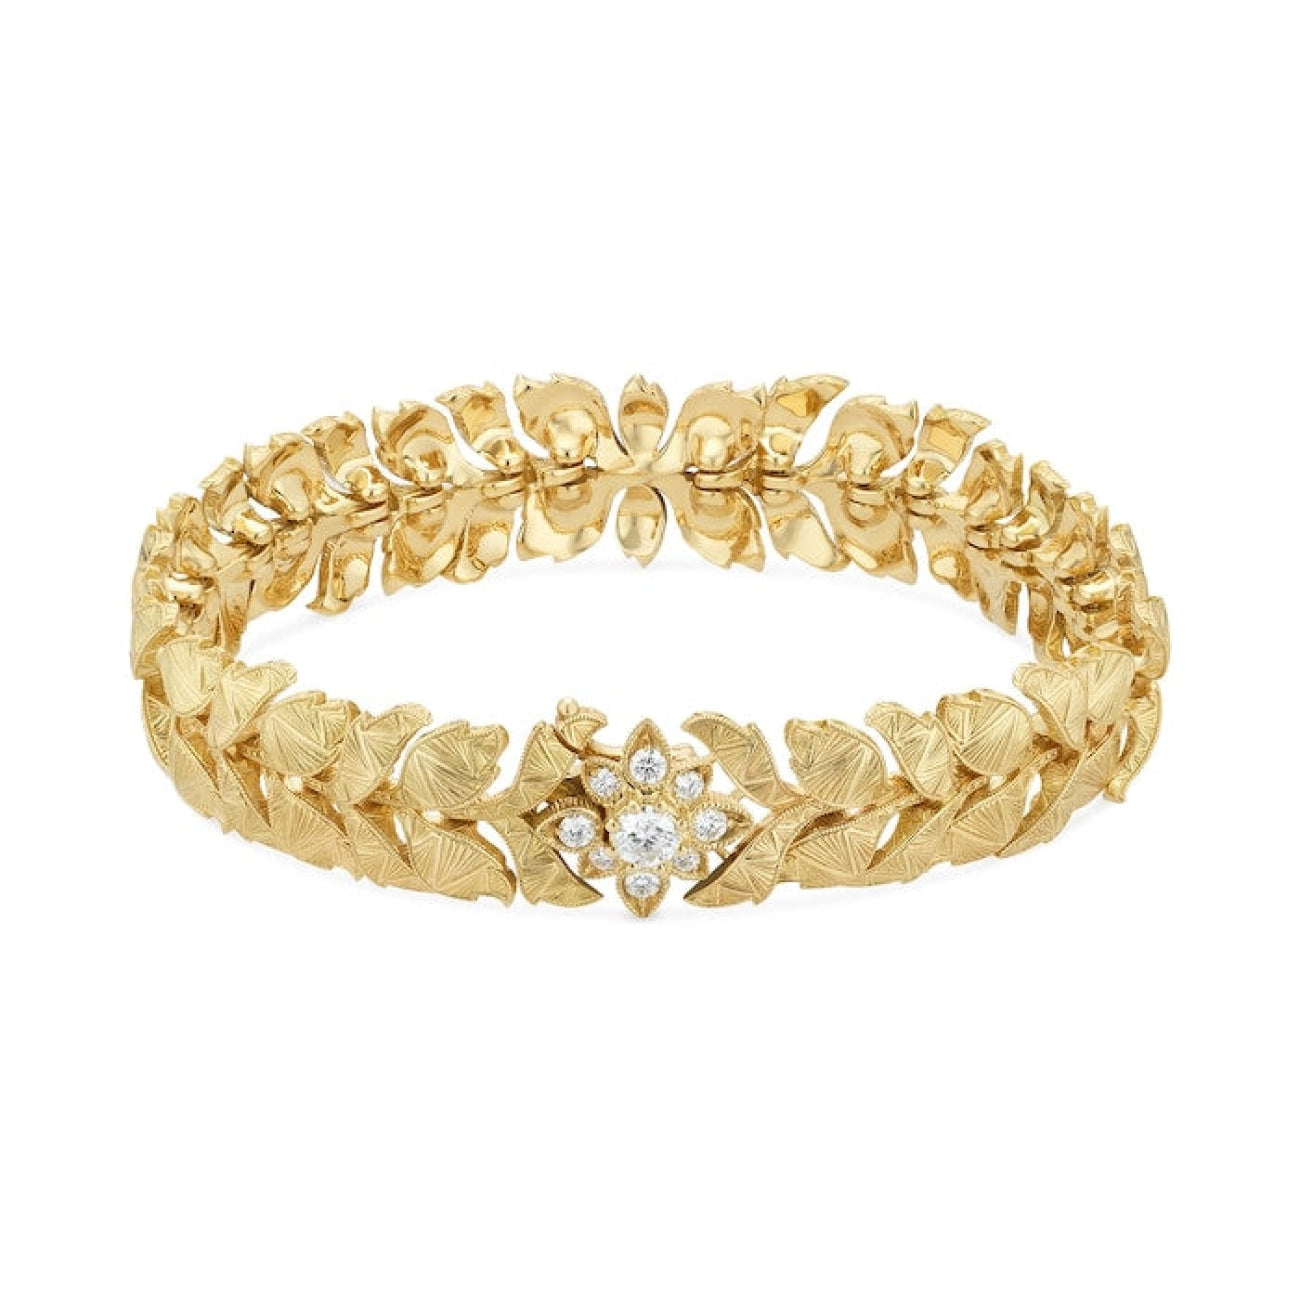 Gucci Flora bracelet with diamonds - Fecarotta Gioielli